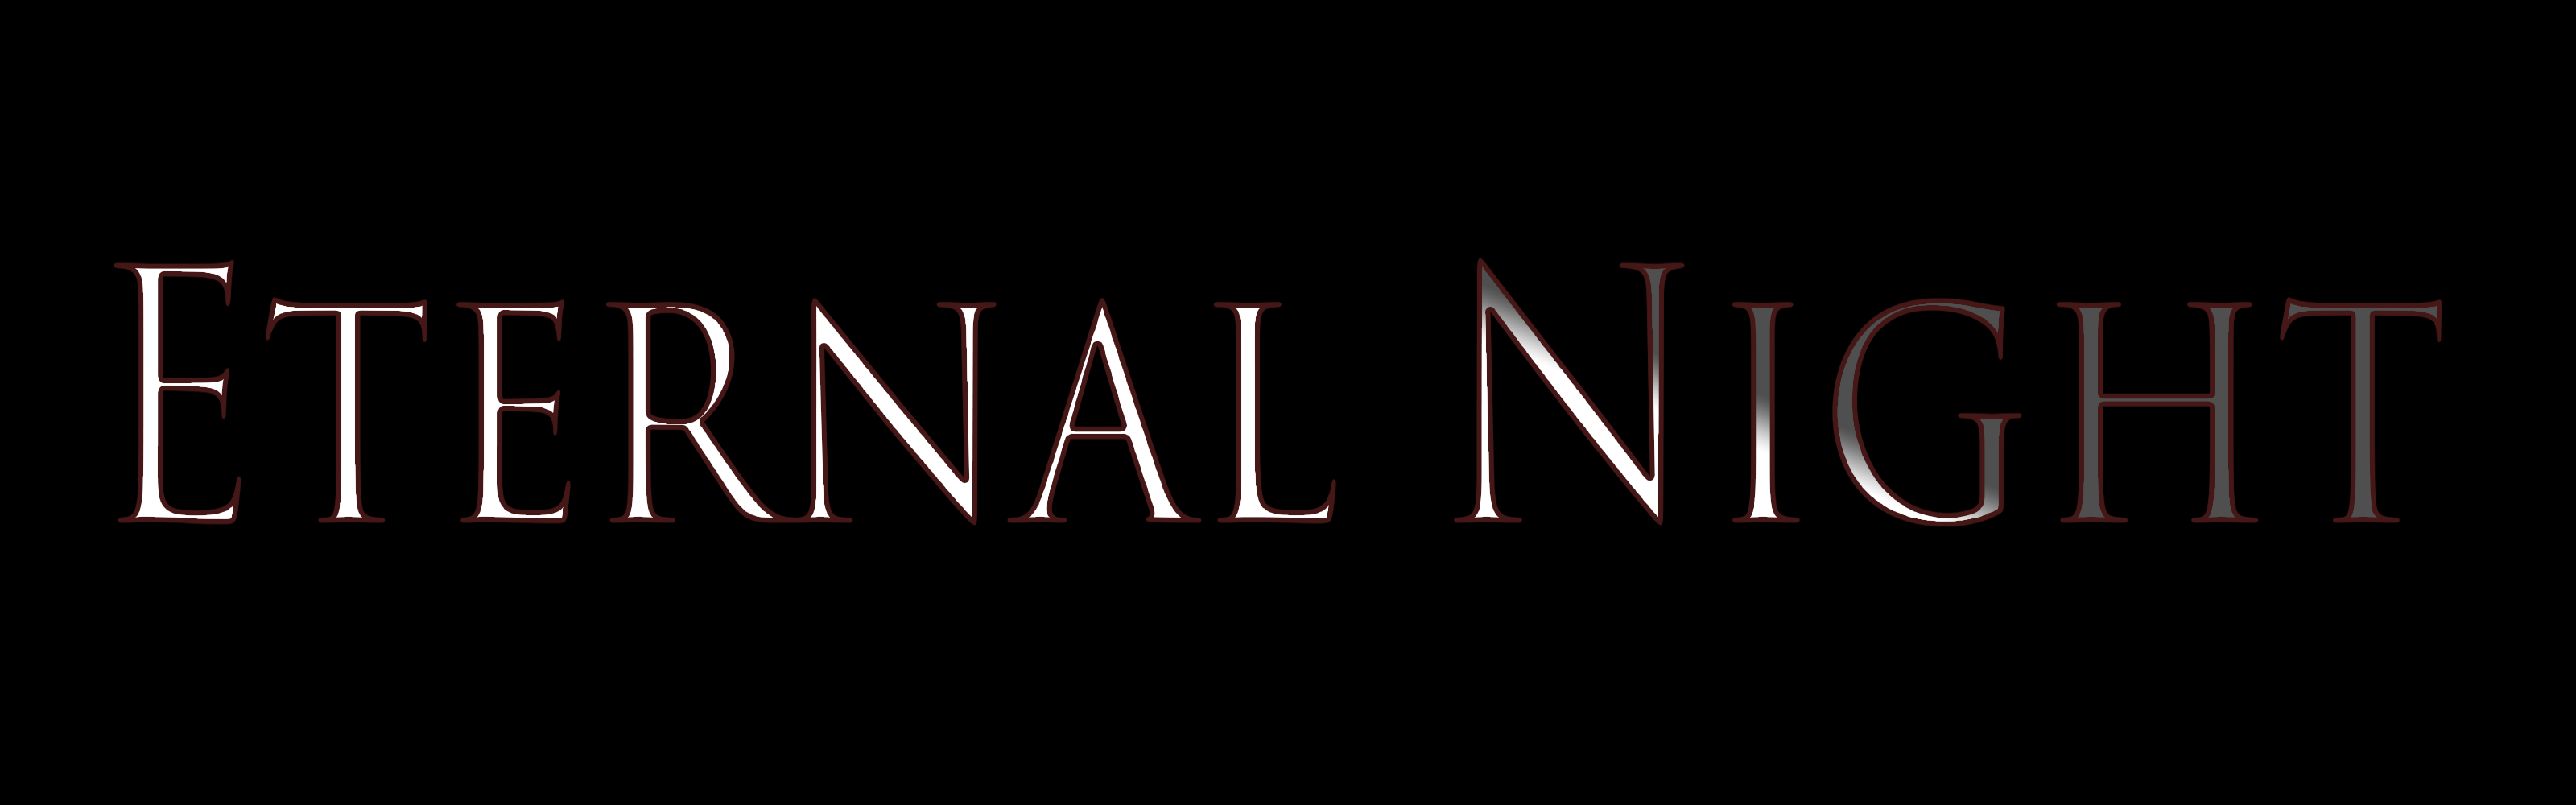 Eternal Night [Demo]